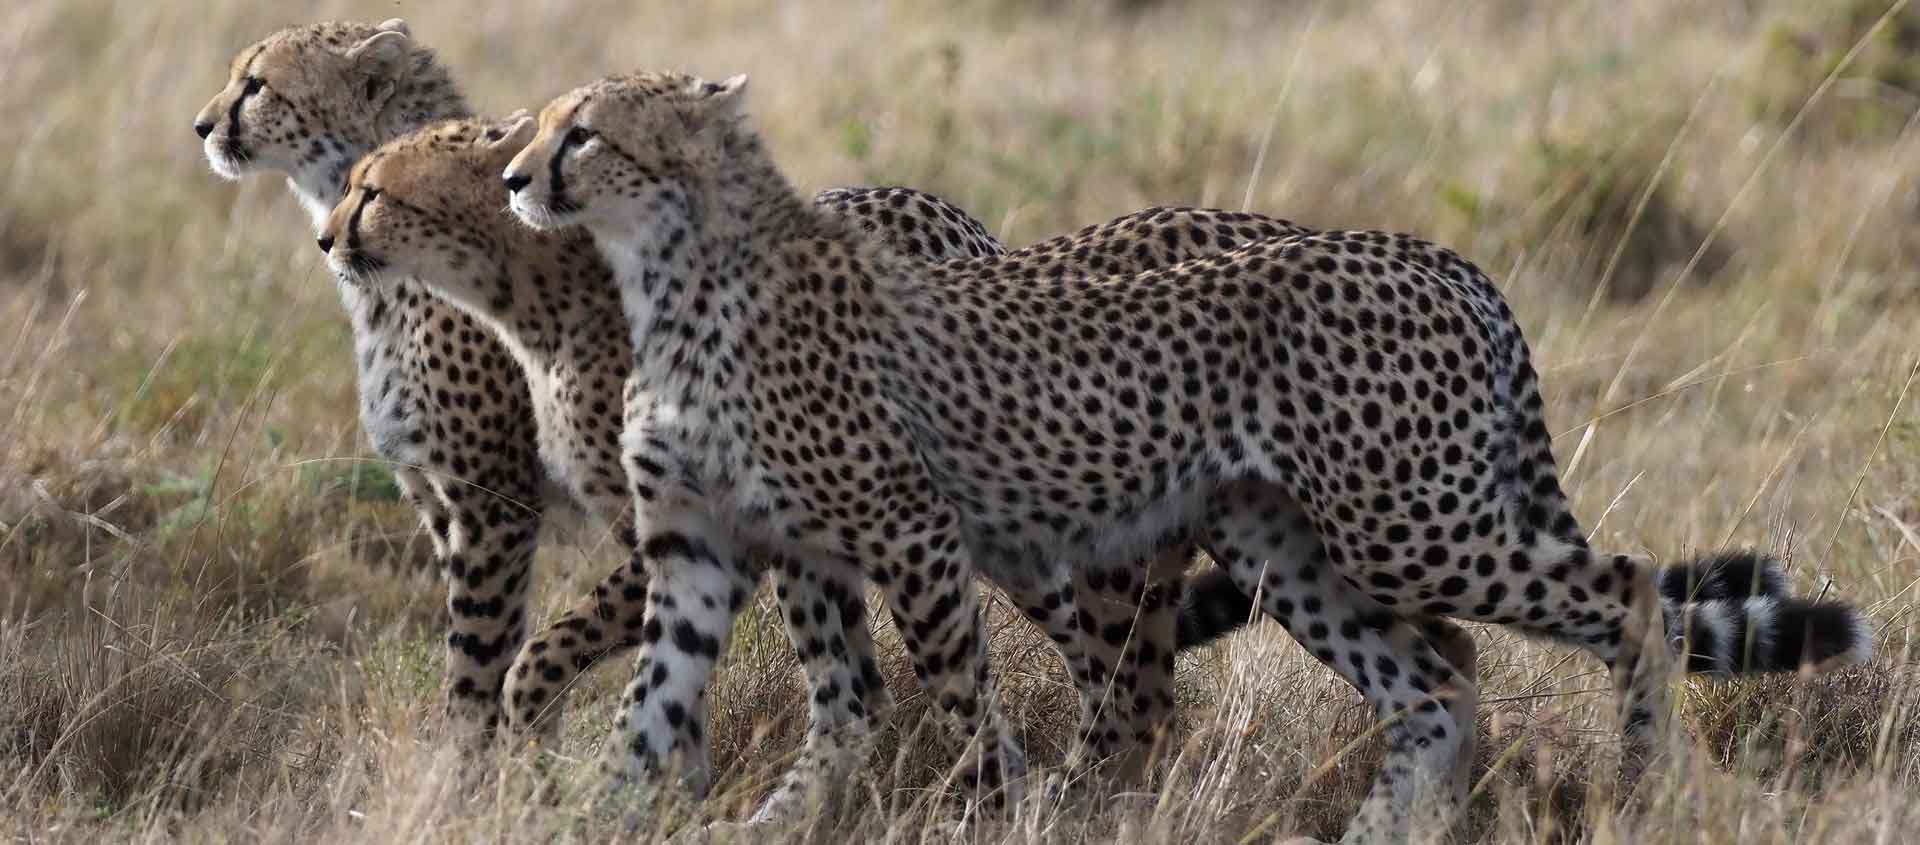 Kenya private wildlife reserves image of Cheetahs